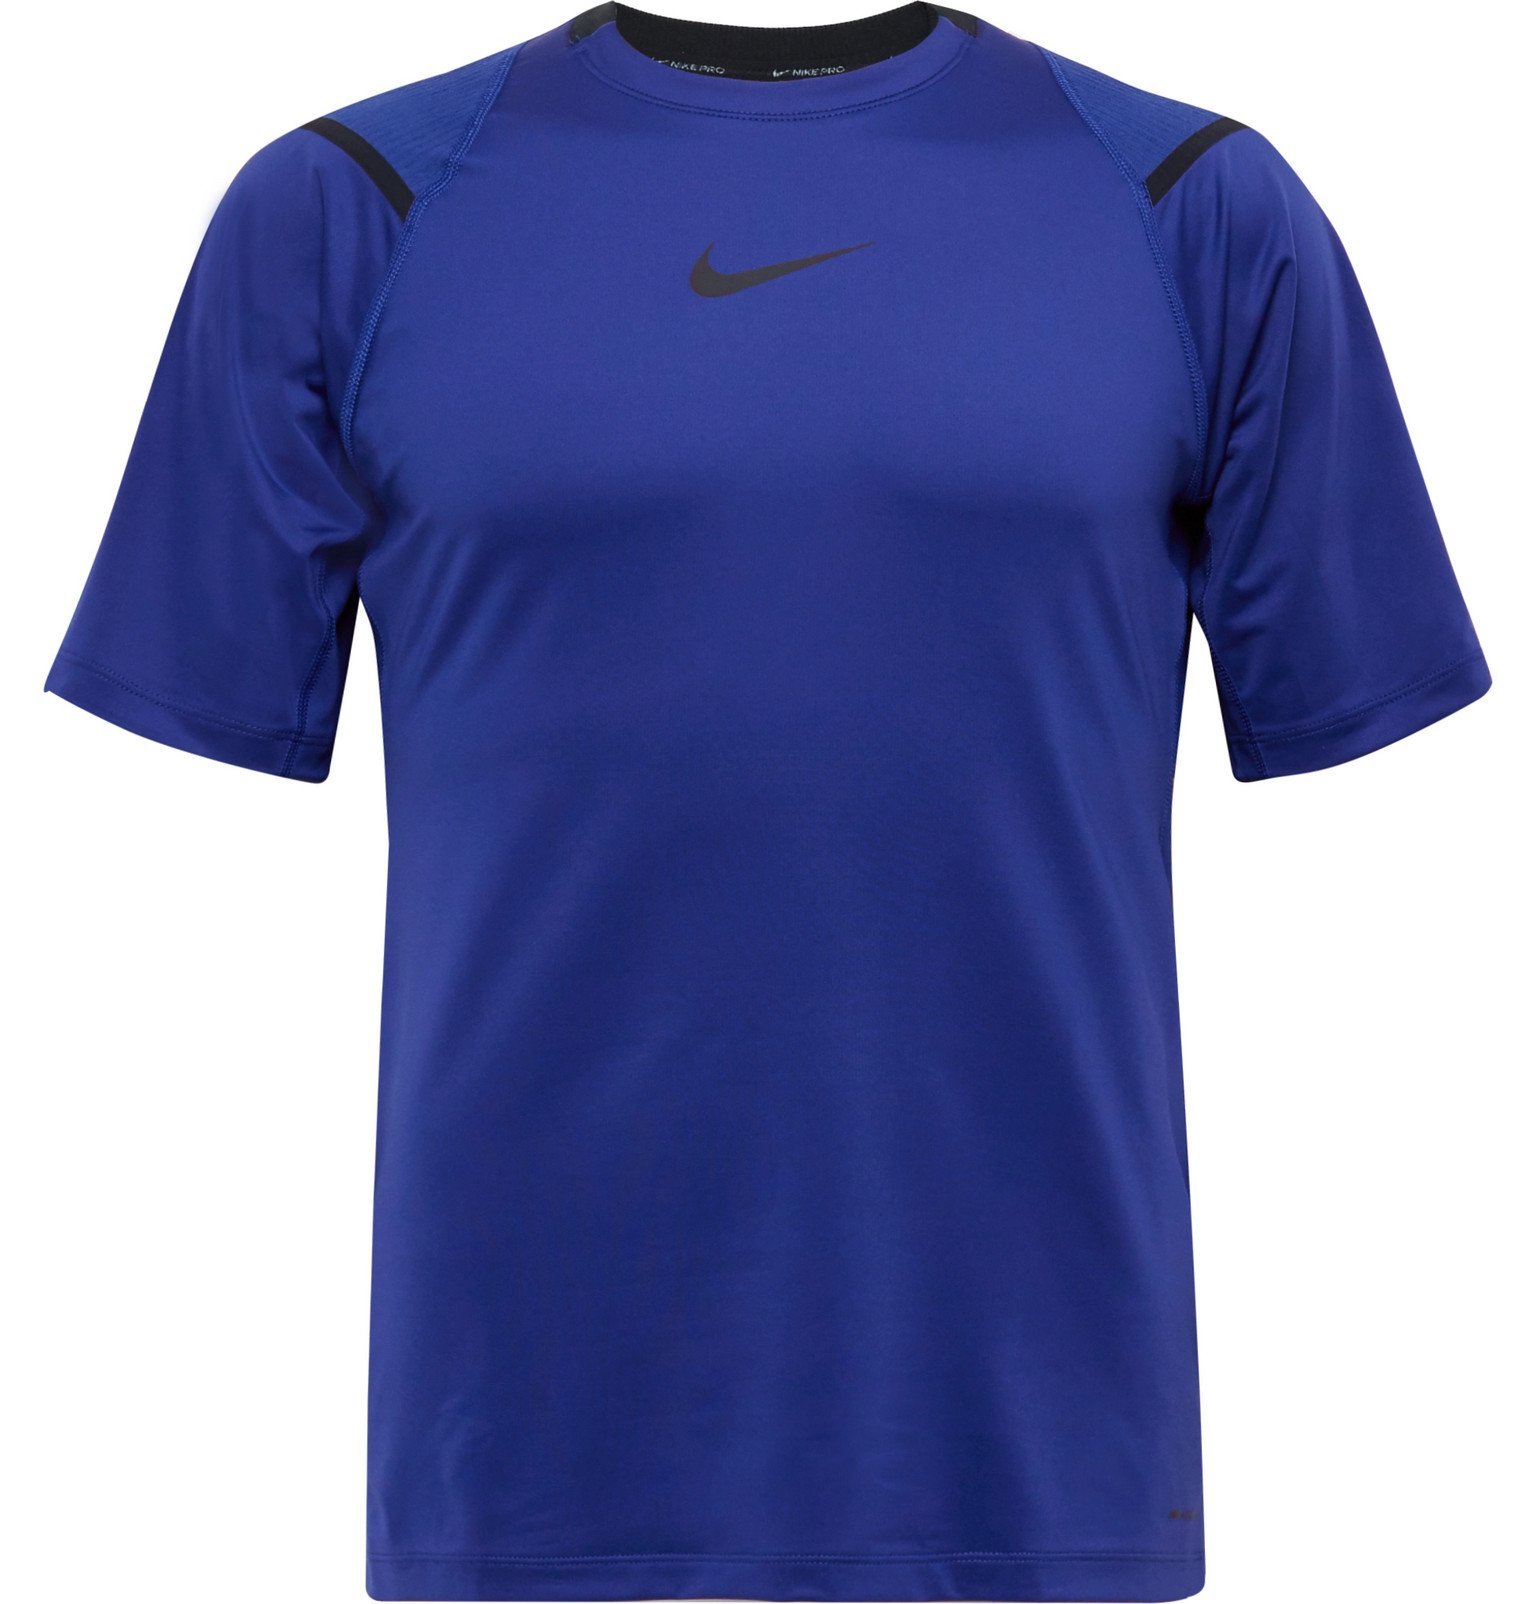 Nike Training - Pro AeroAdapt Dri-FIT T-Shirt - Blue Nike Training